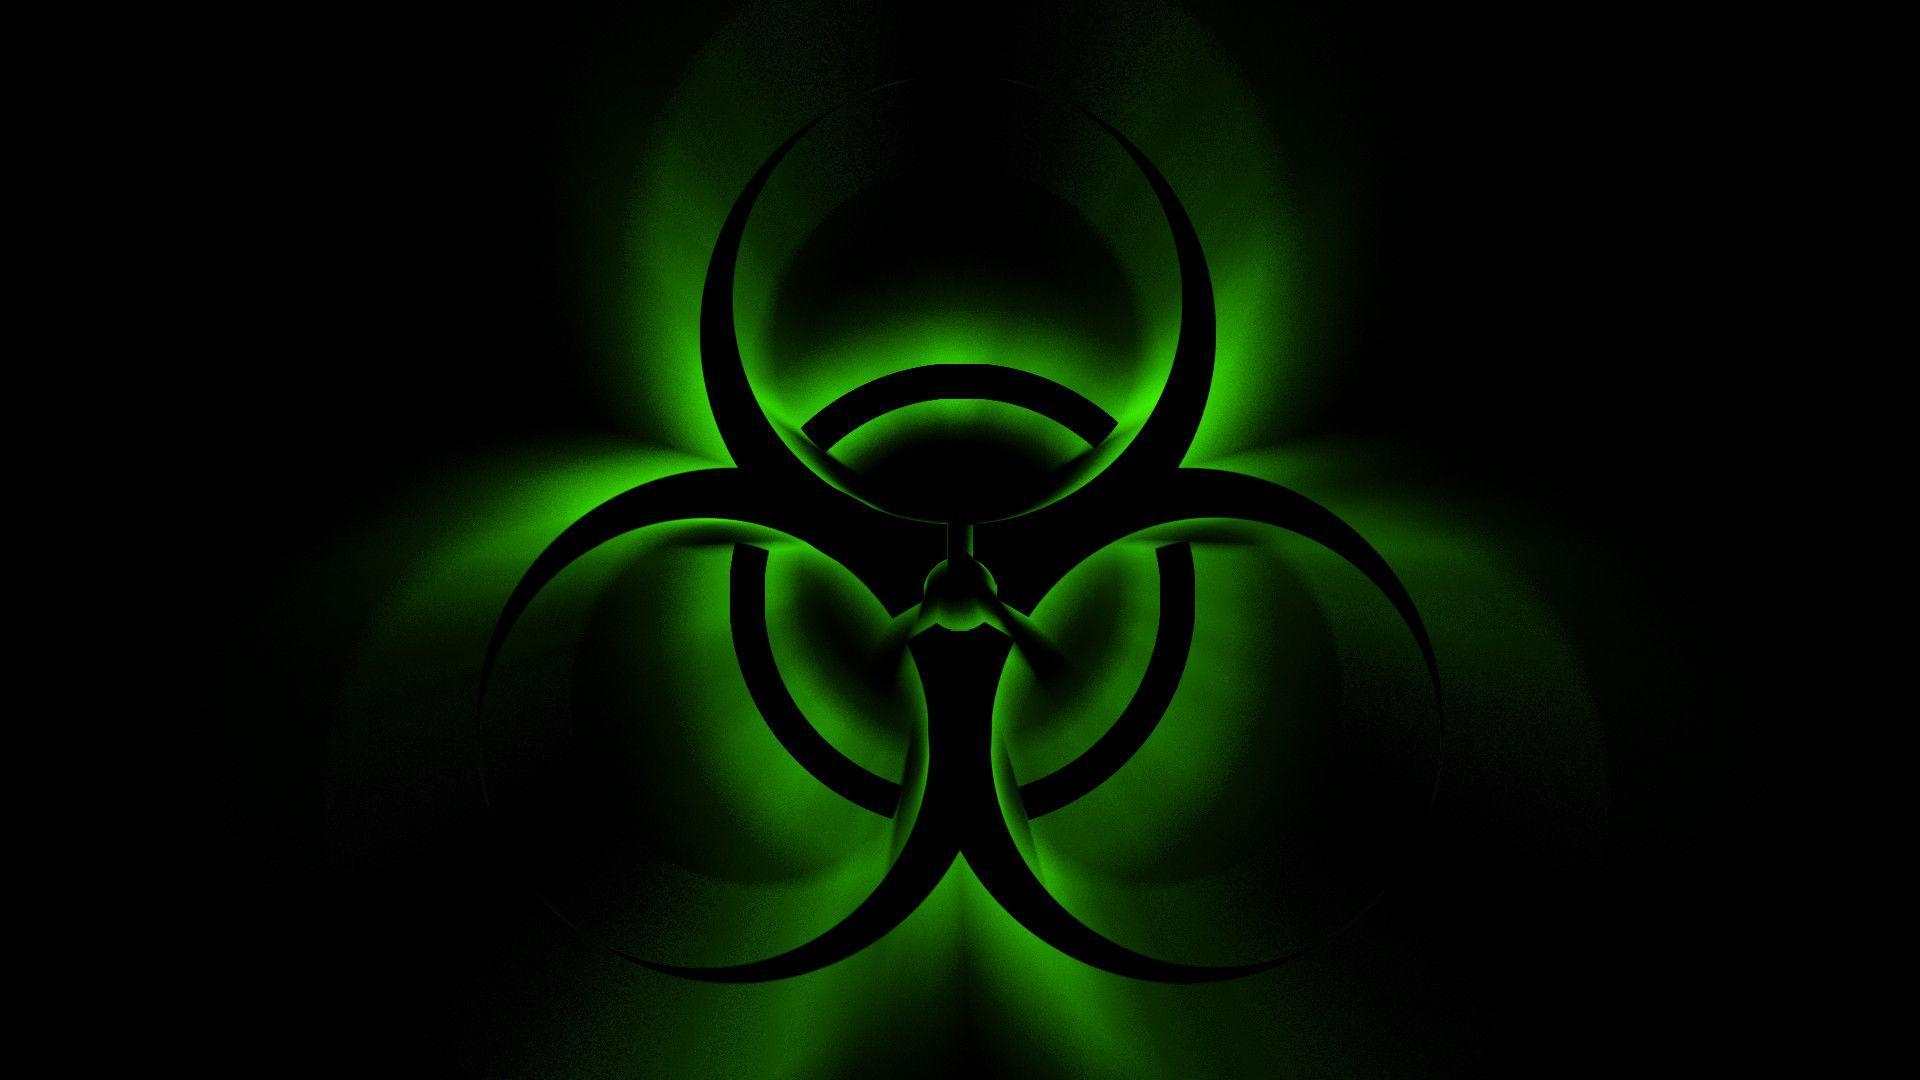 Wallpaper.wiki Biohazard Symbol Wallpaper Full HD PIC WPB0014946